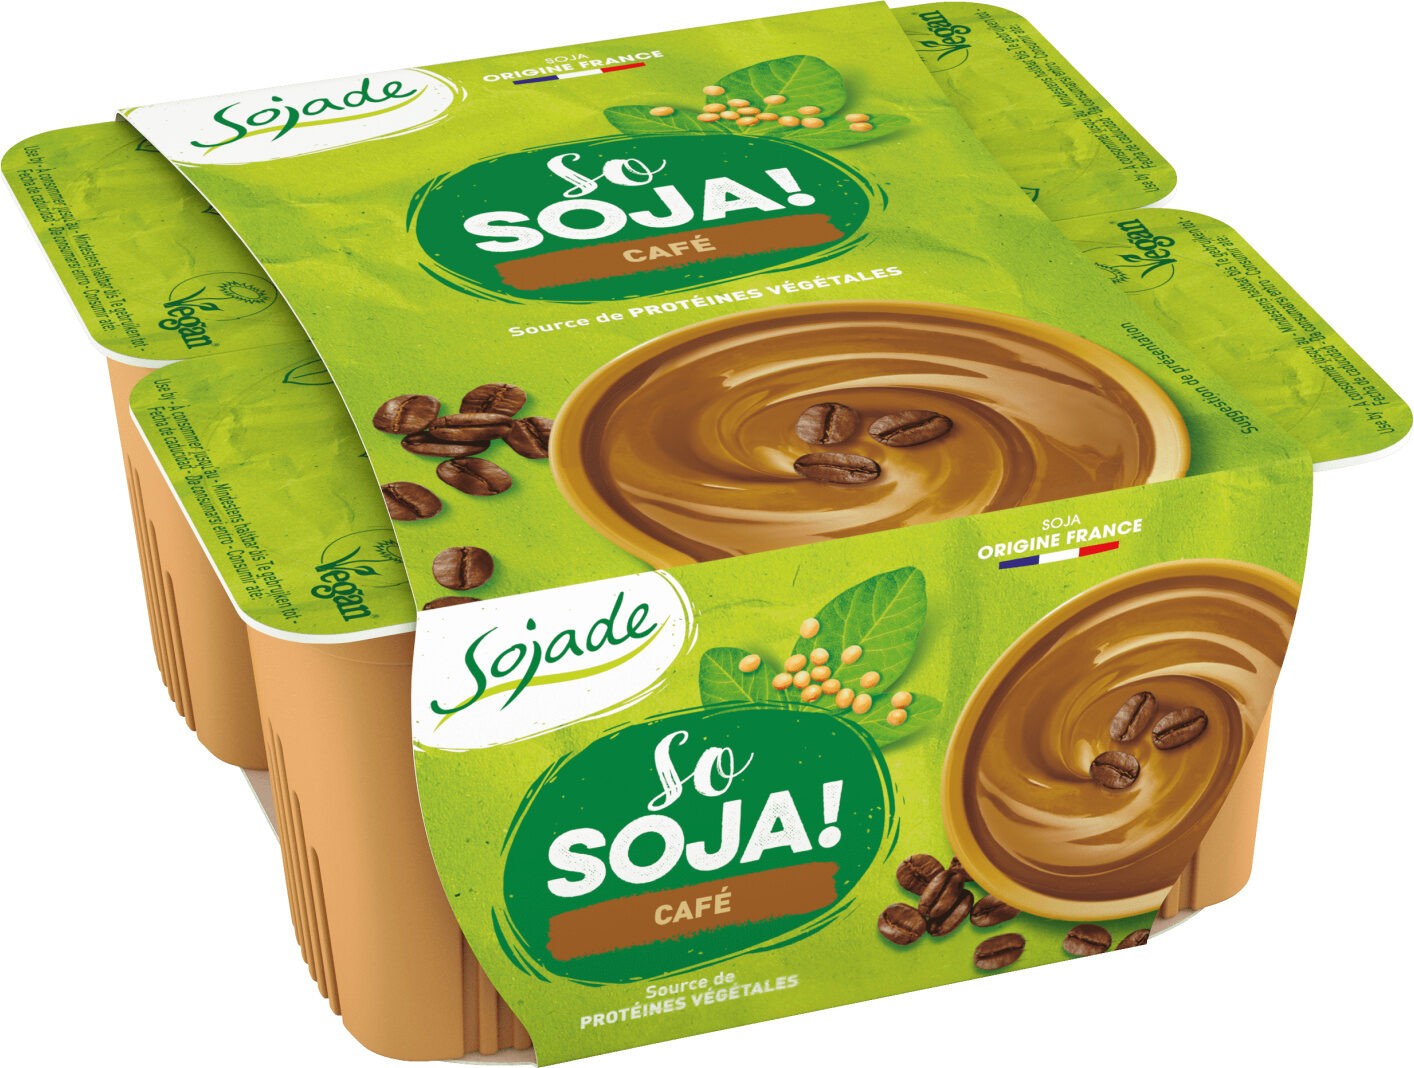 So Soja ! Café - Product - fr